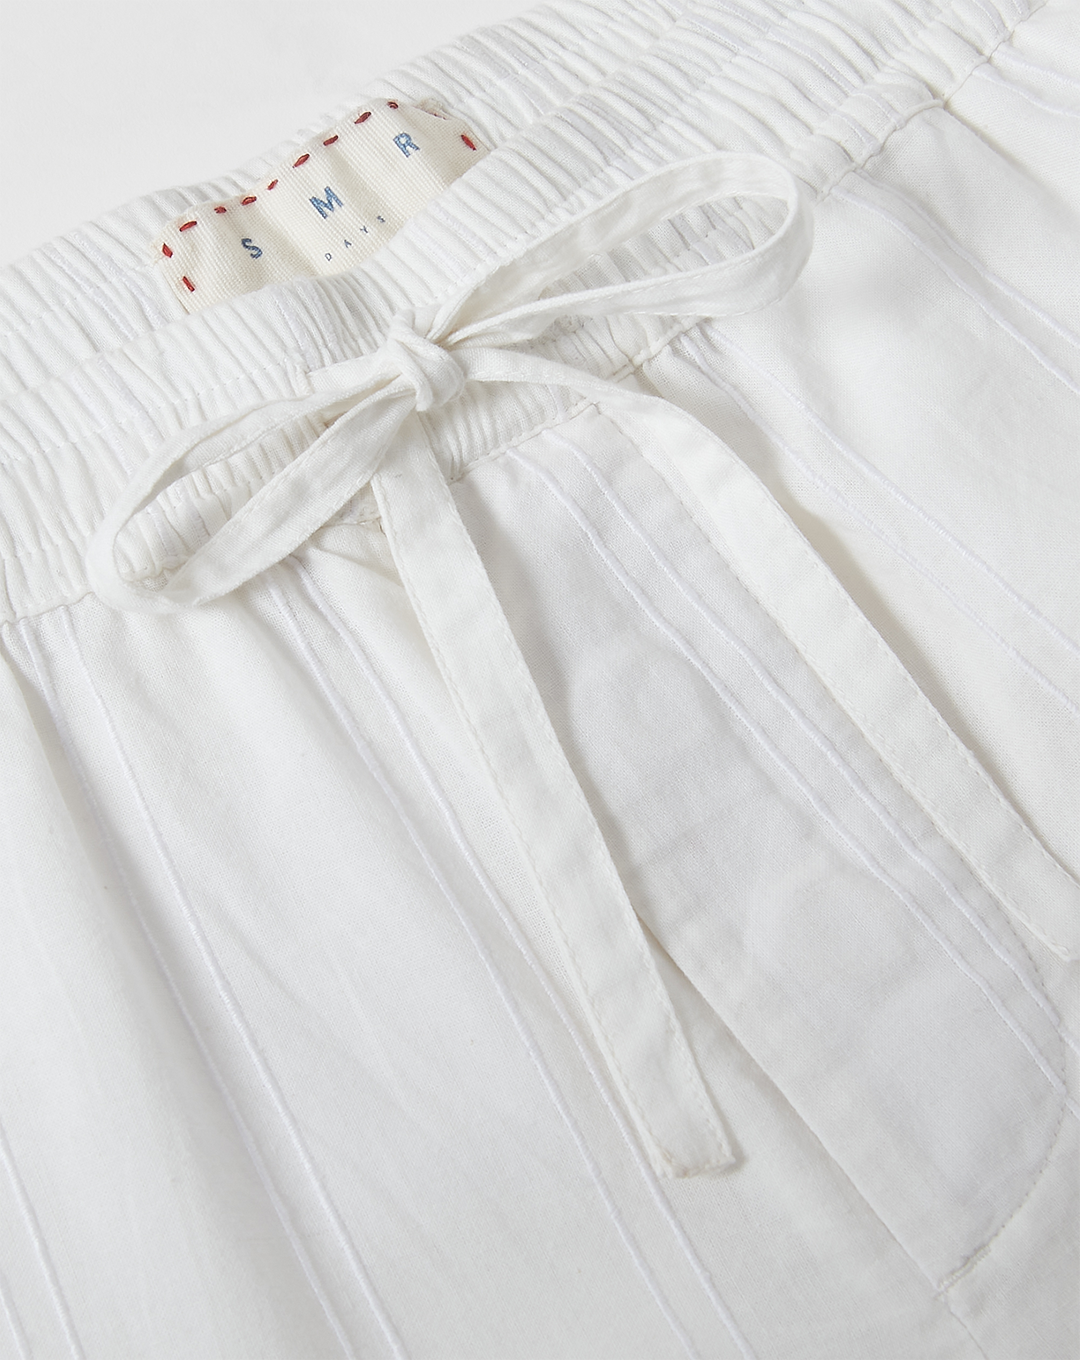 Malibu Trousers in White - SMR Days